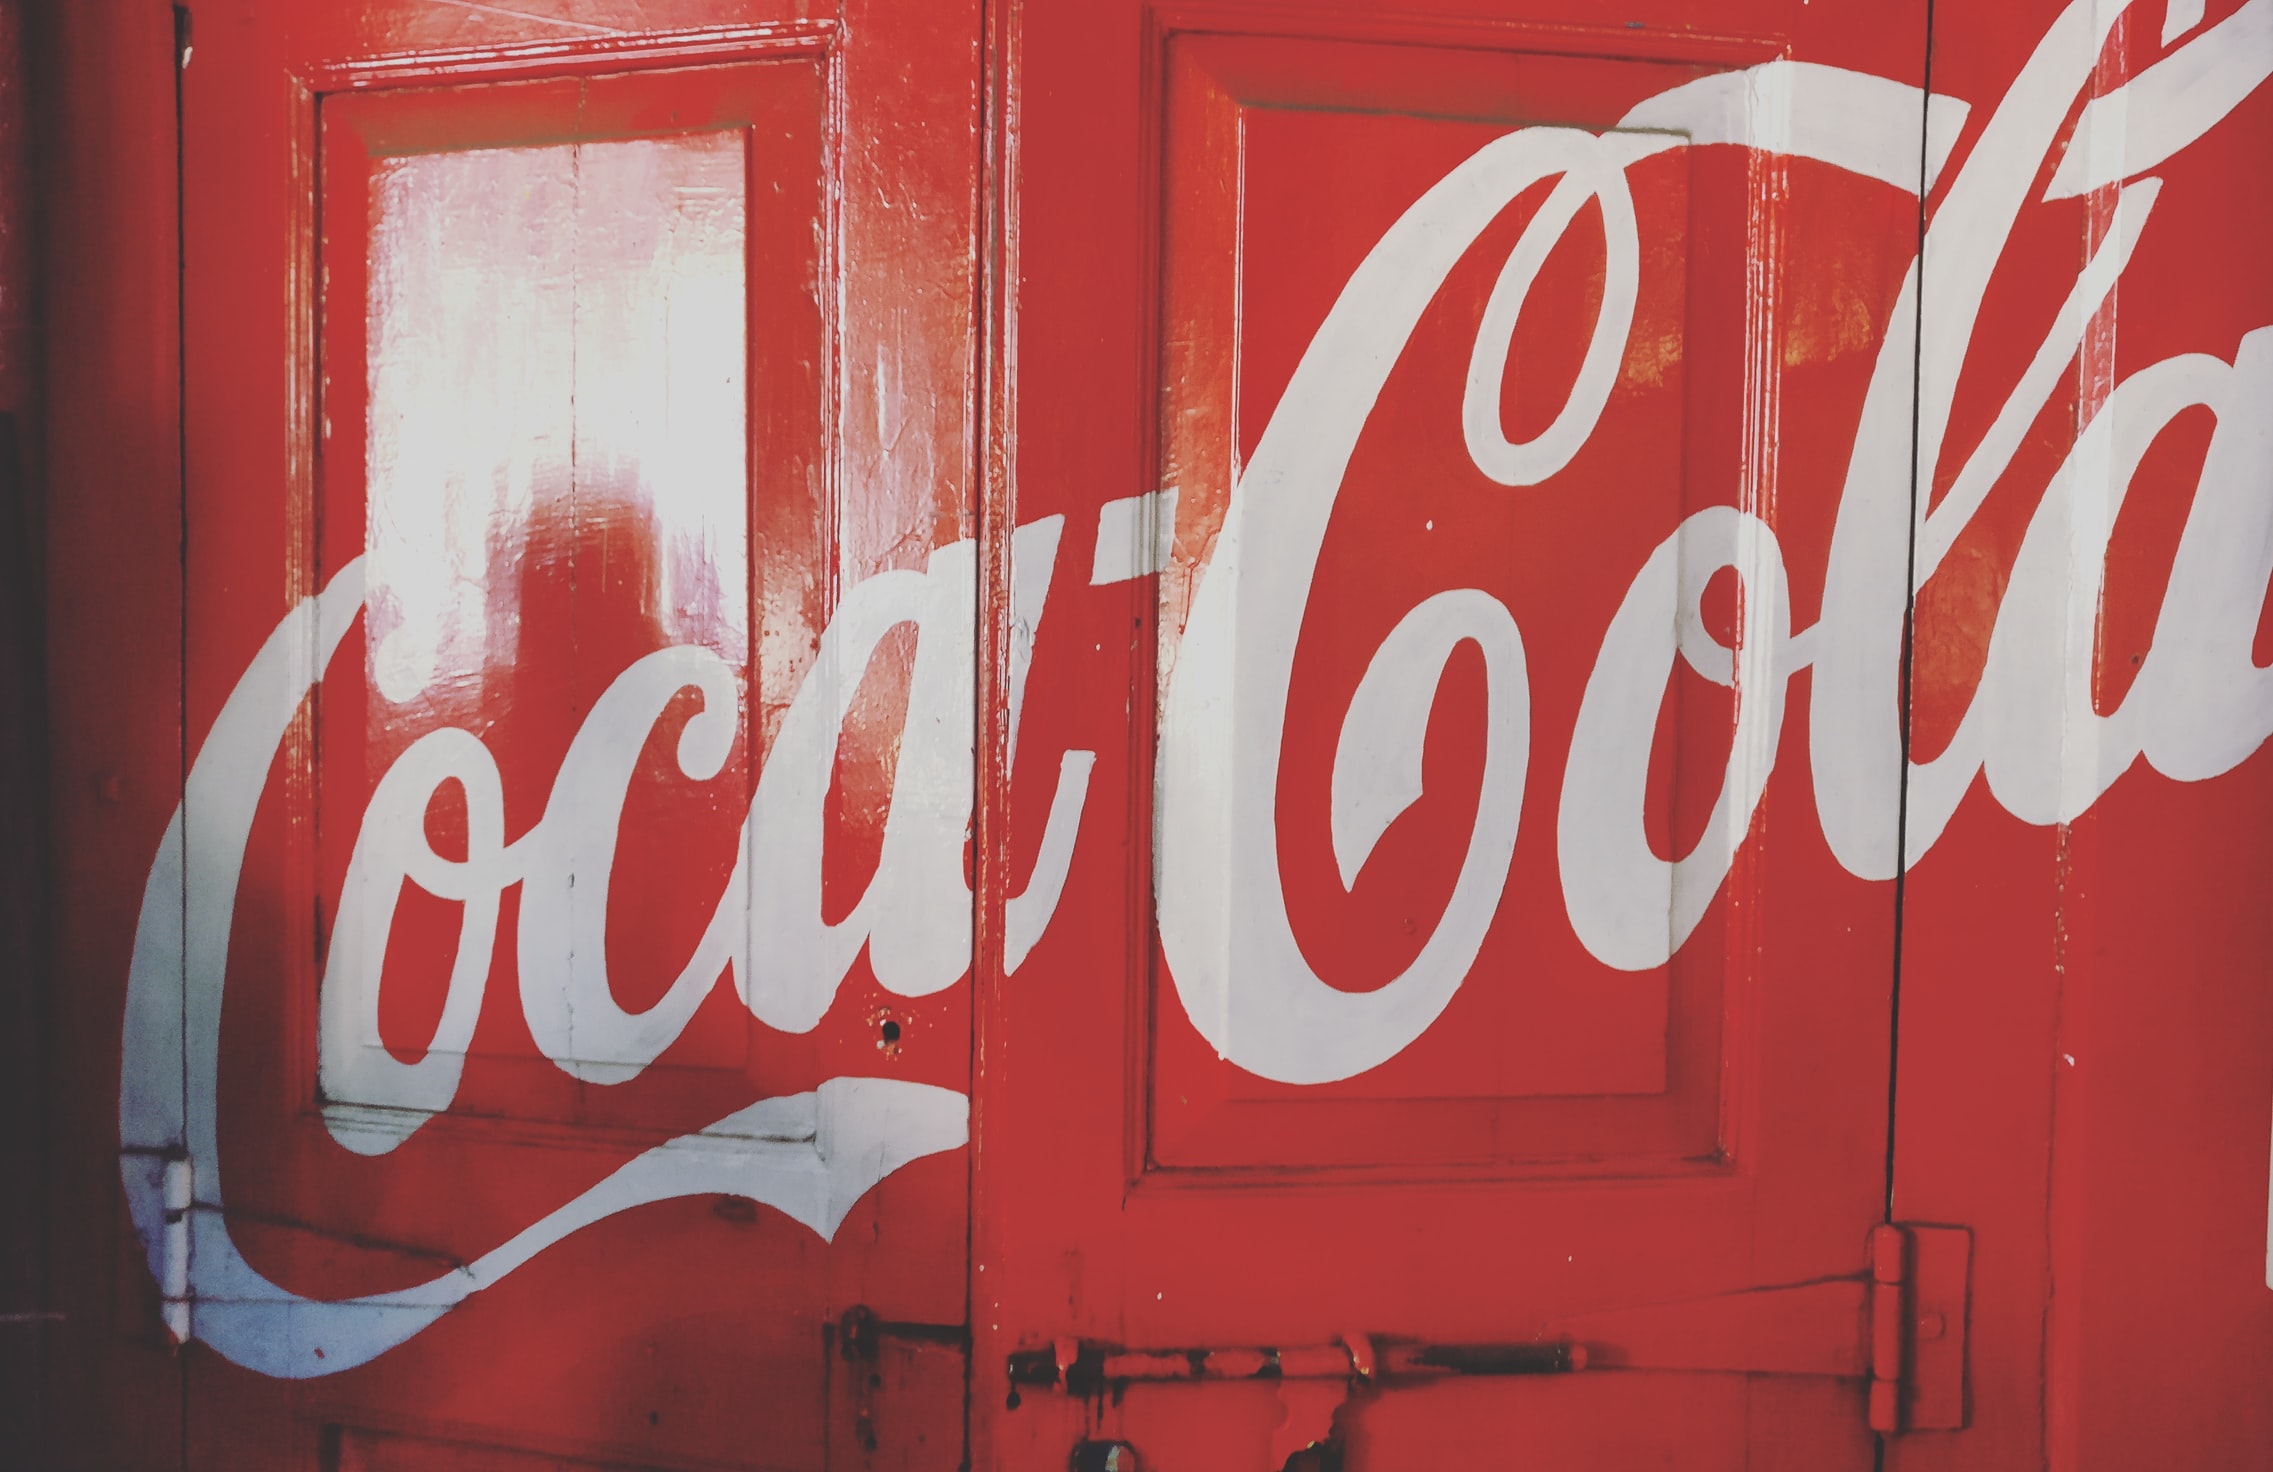 Coca-Cola Positioning Statement: